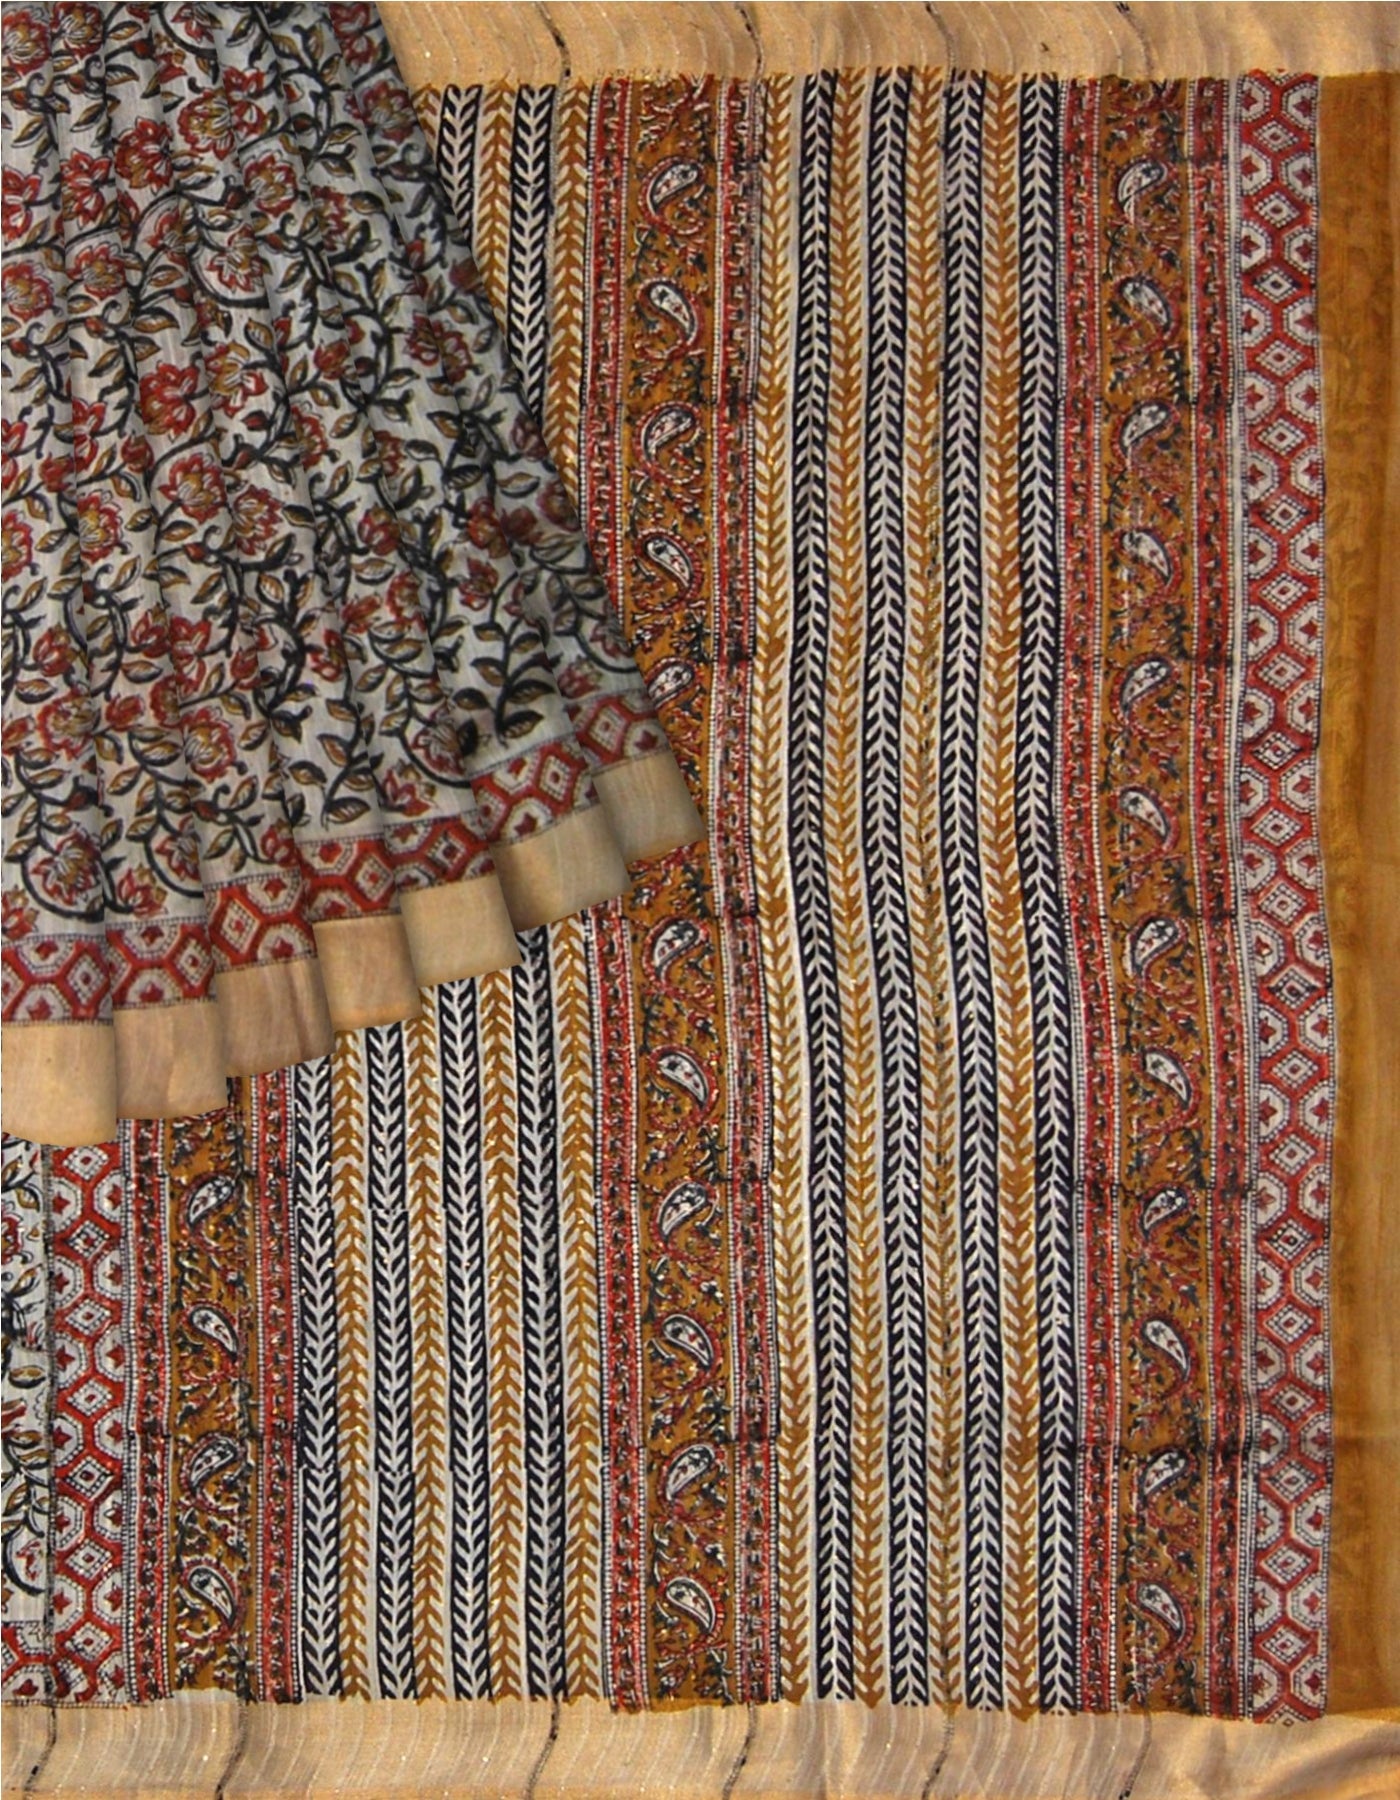 Off White Kalamkari Cotton Saree with Burnt Orange Floral Print